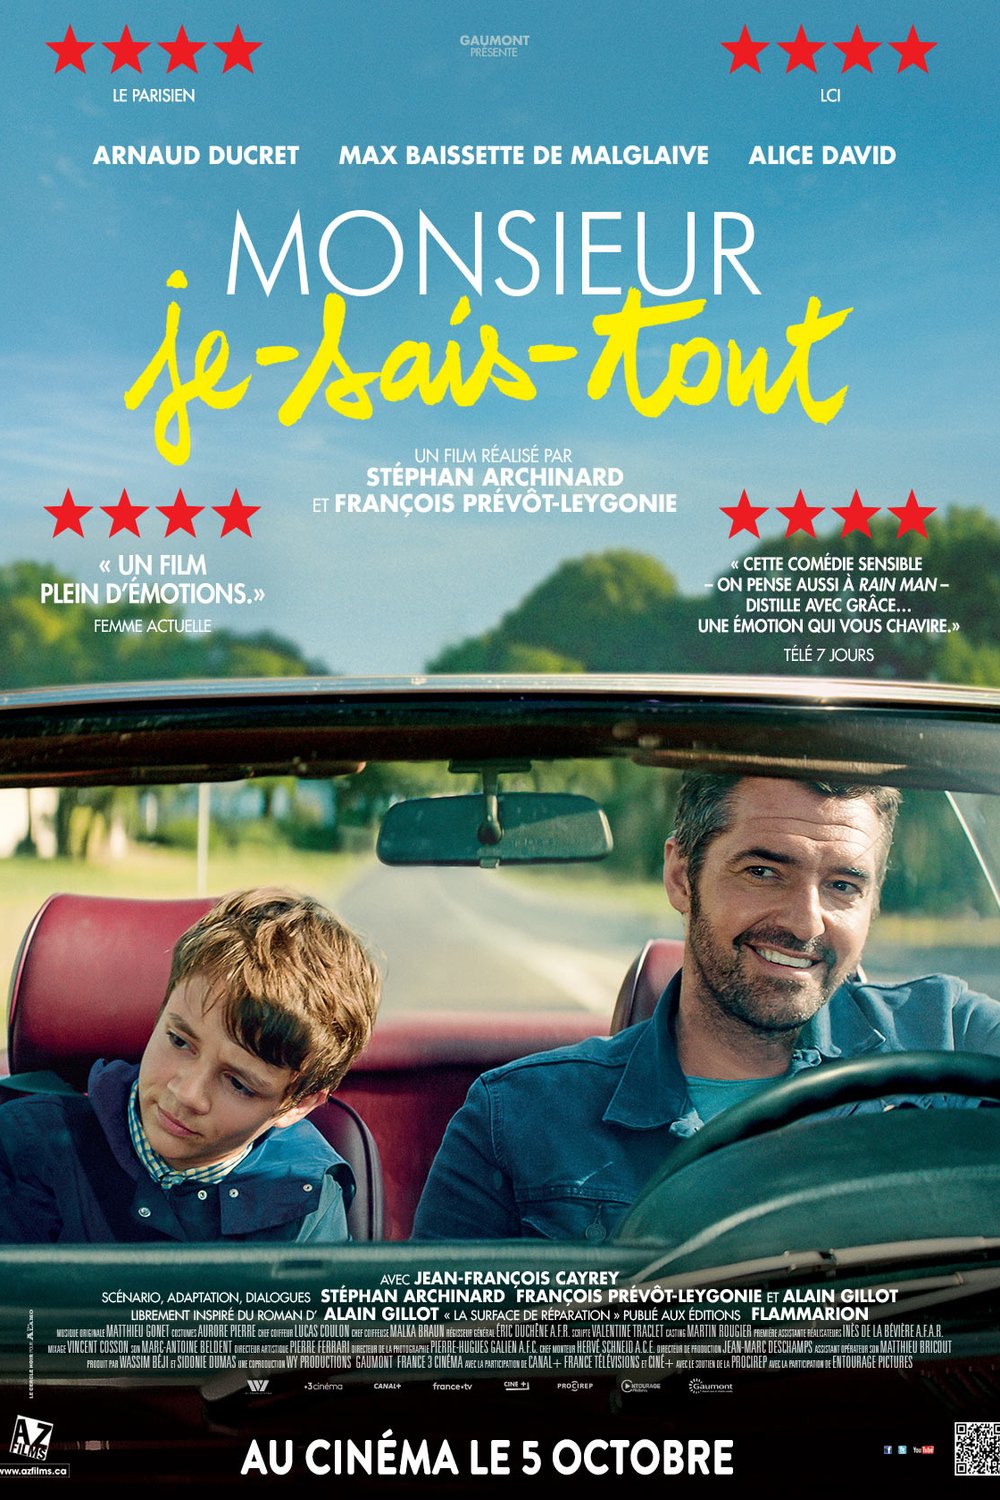 Poster of the movie Monsieur Je-Sais-Tout